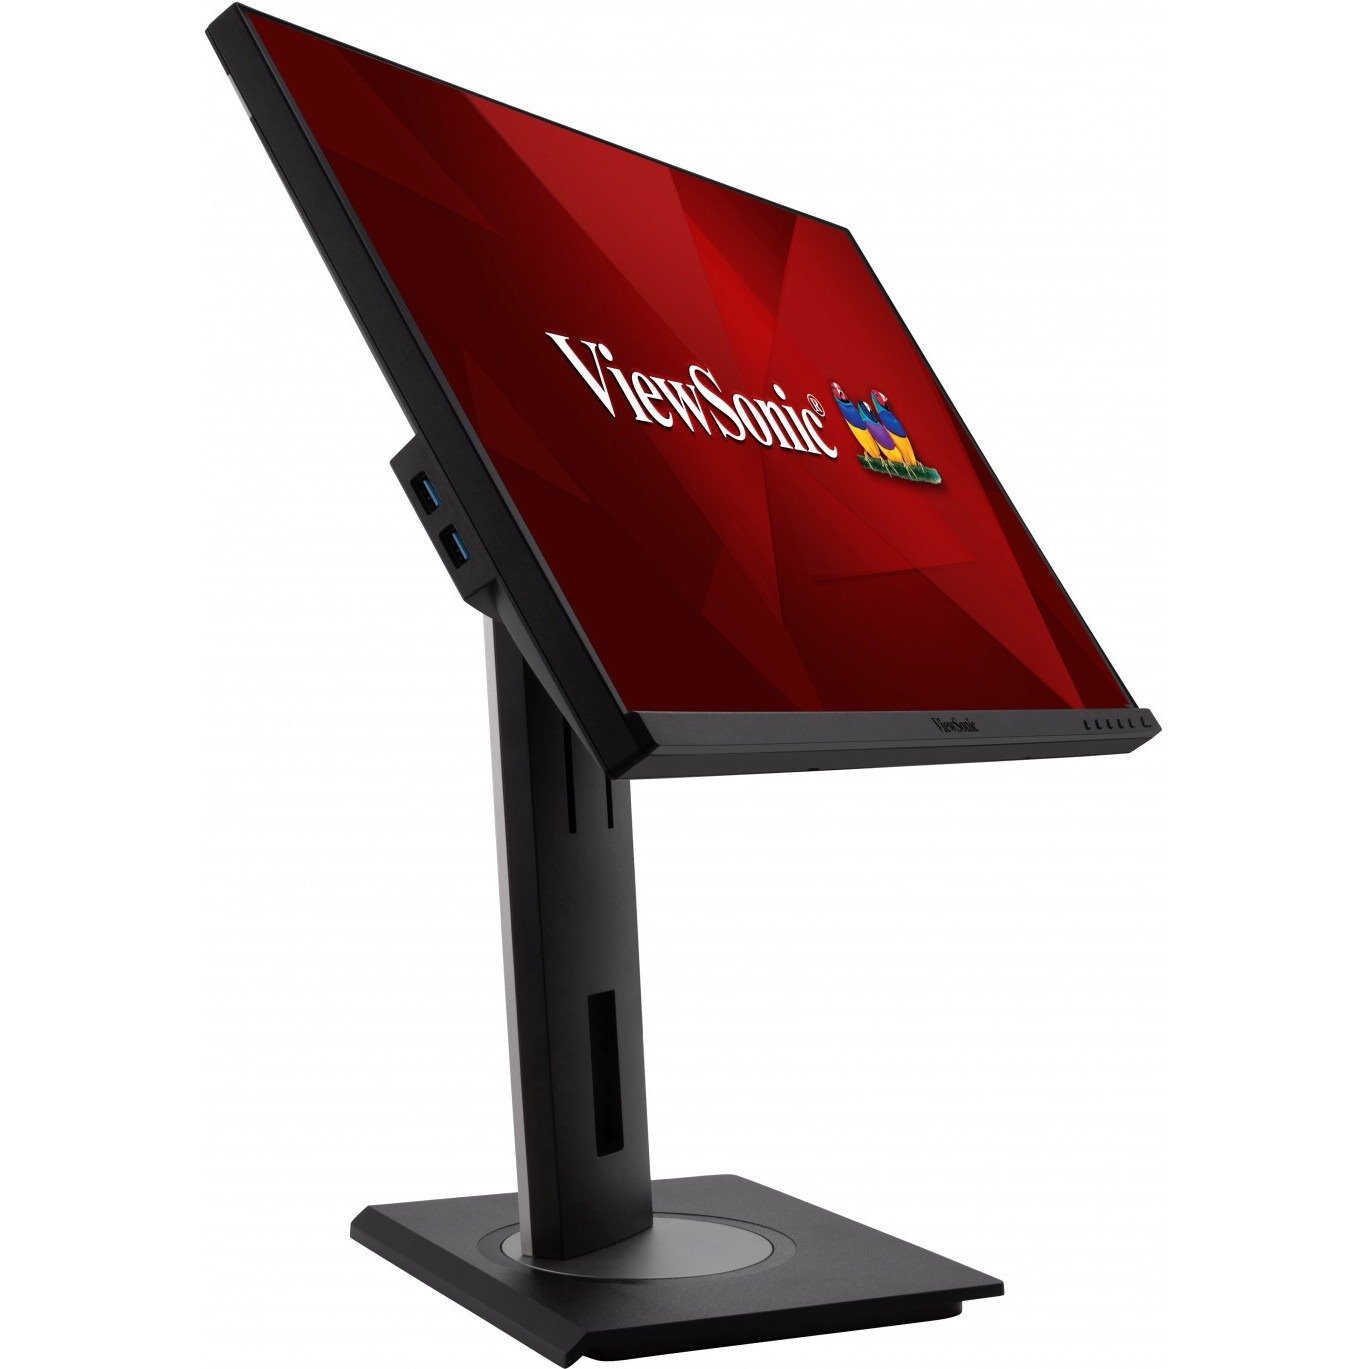 ViewSonic VG2748A-2 68.6 cm (27") Full HD LED LCD Monitor - 16:9